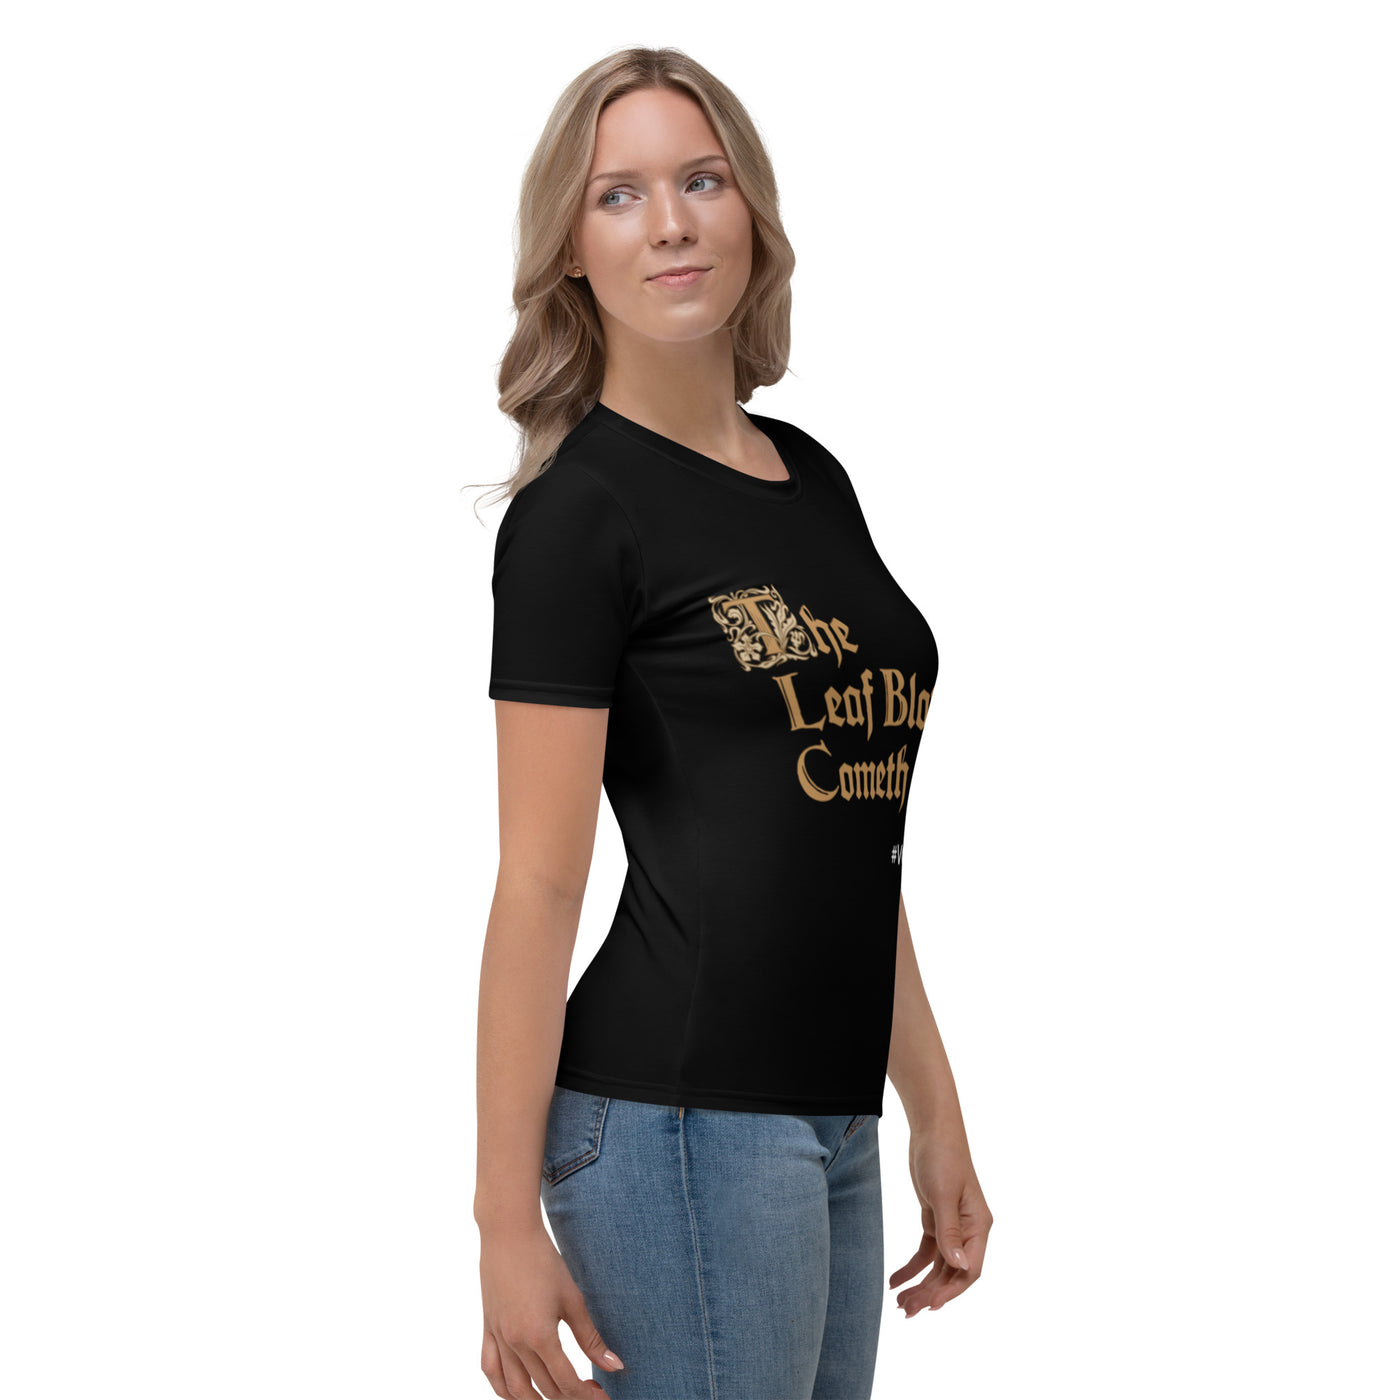 THE LEAF BLOWER COMETH! Women's T-shirt black